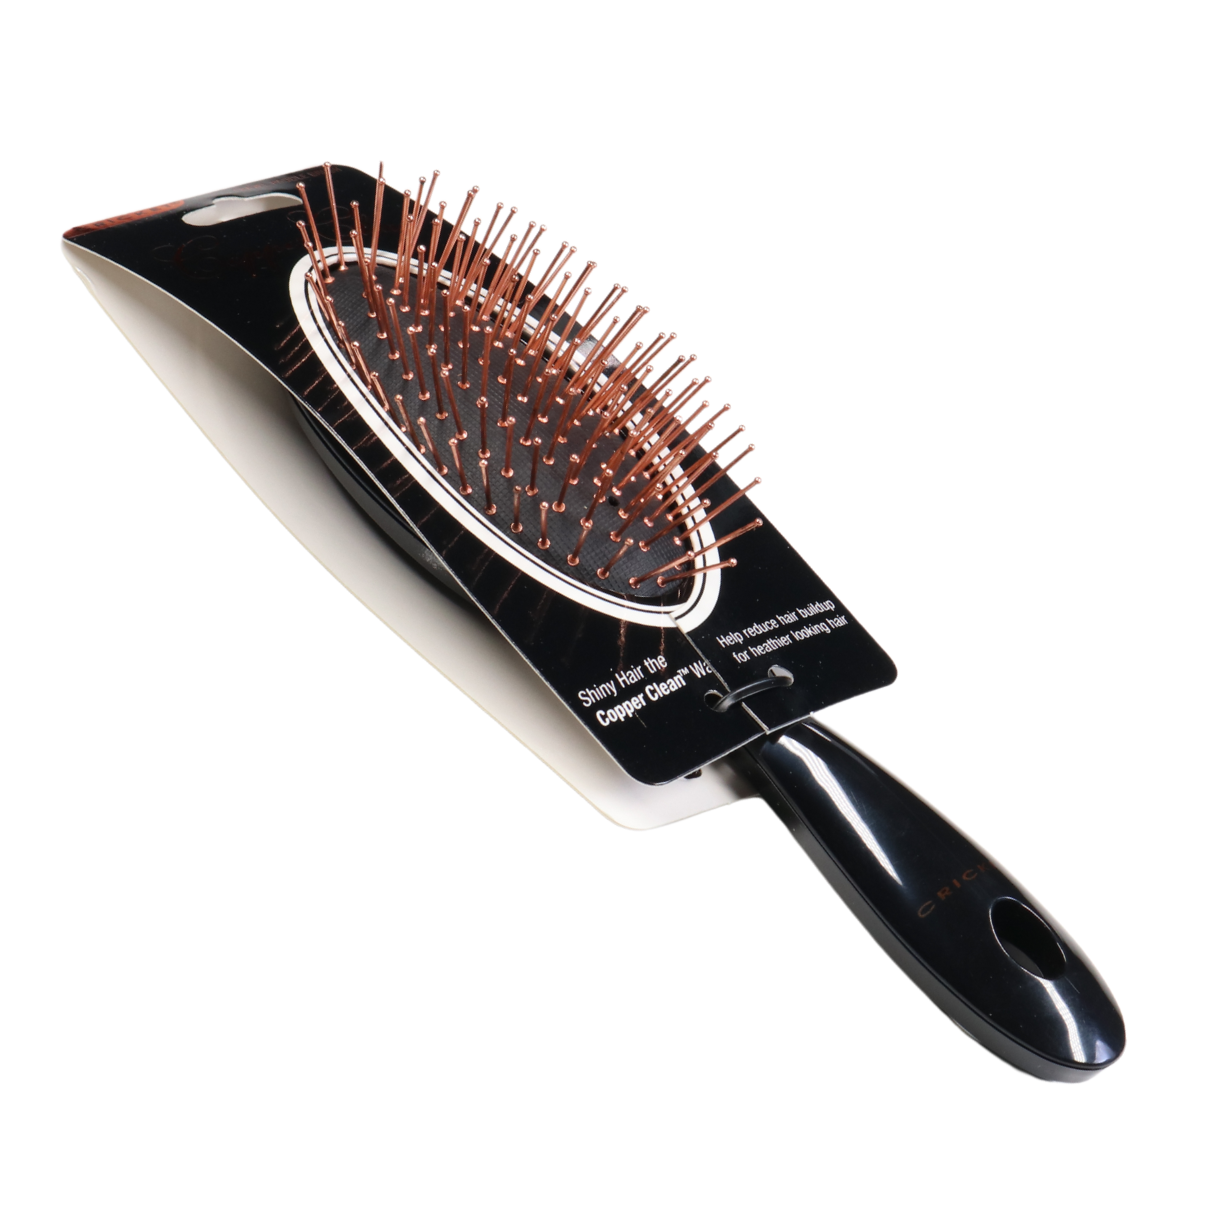 Cricket Copper Clean Designer Sculpt Paddle Hair Brush with Copper Bristles 1 Count